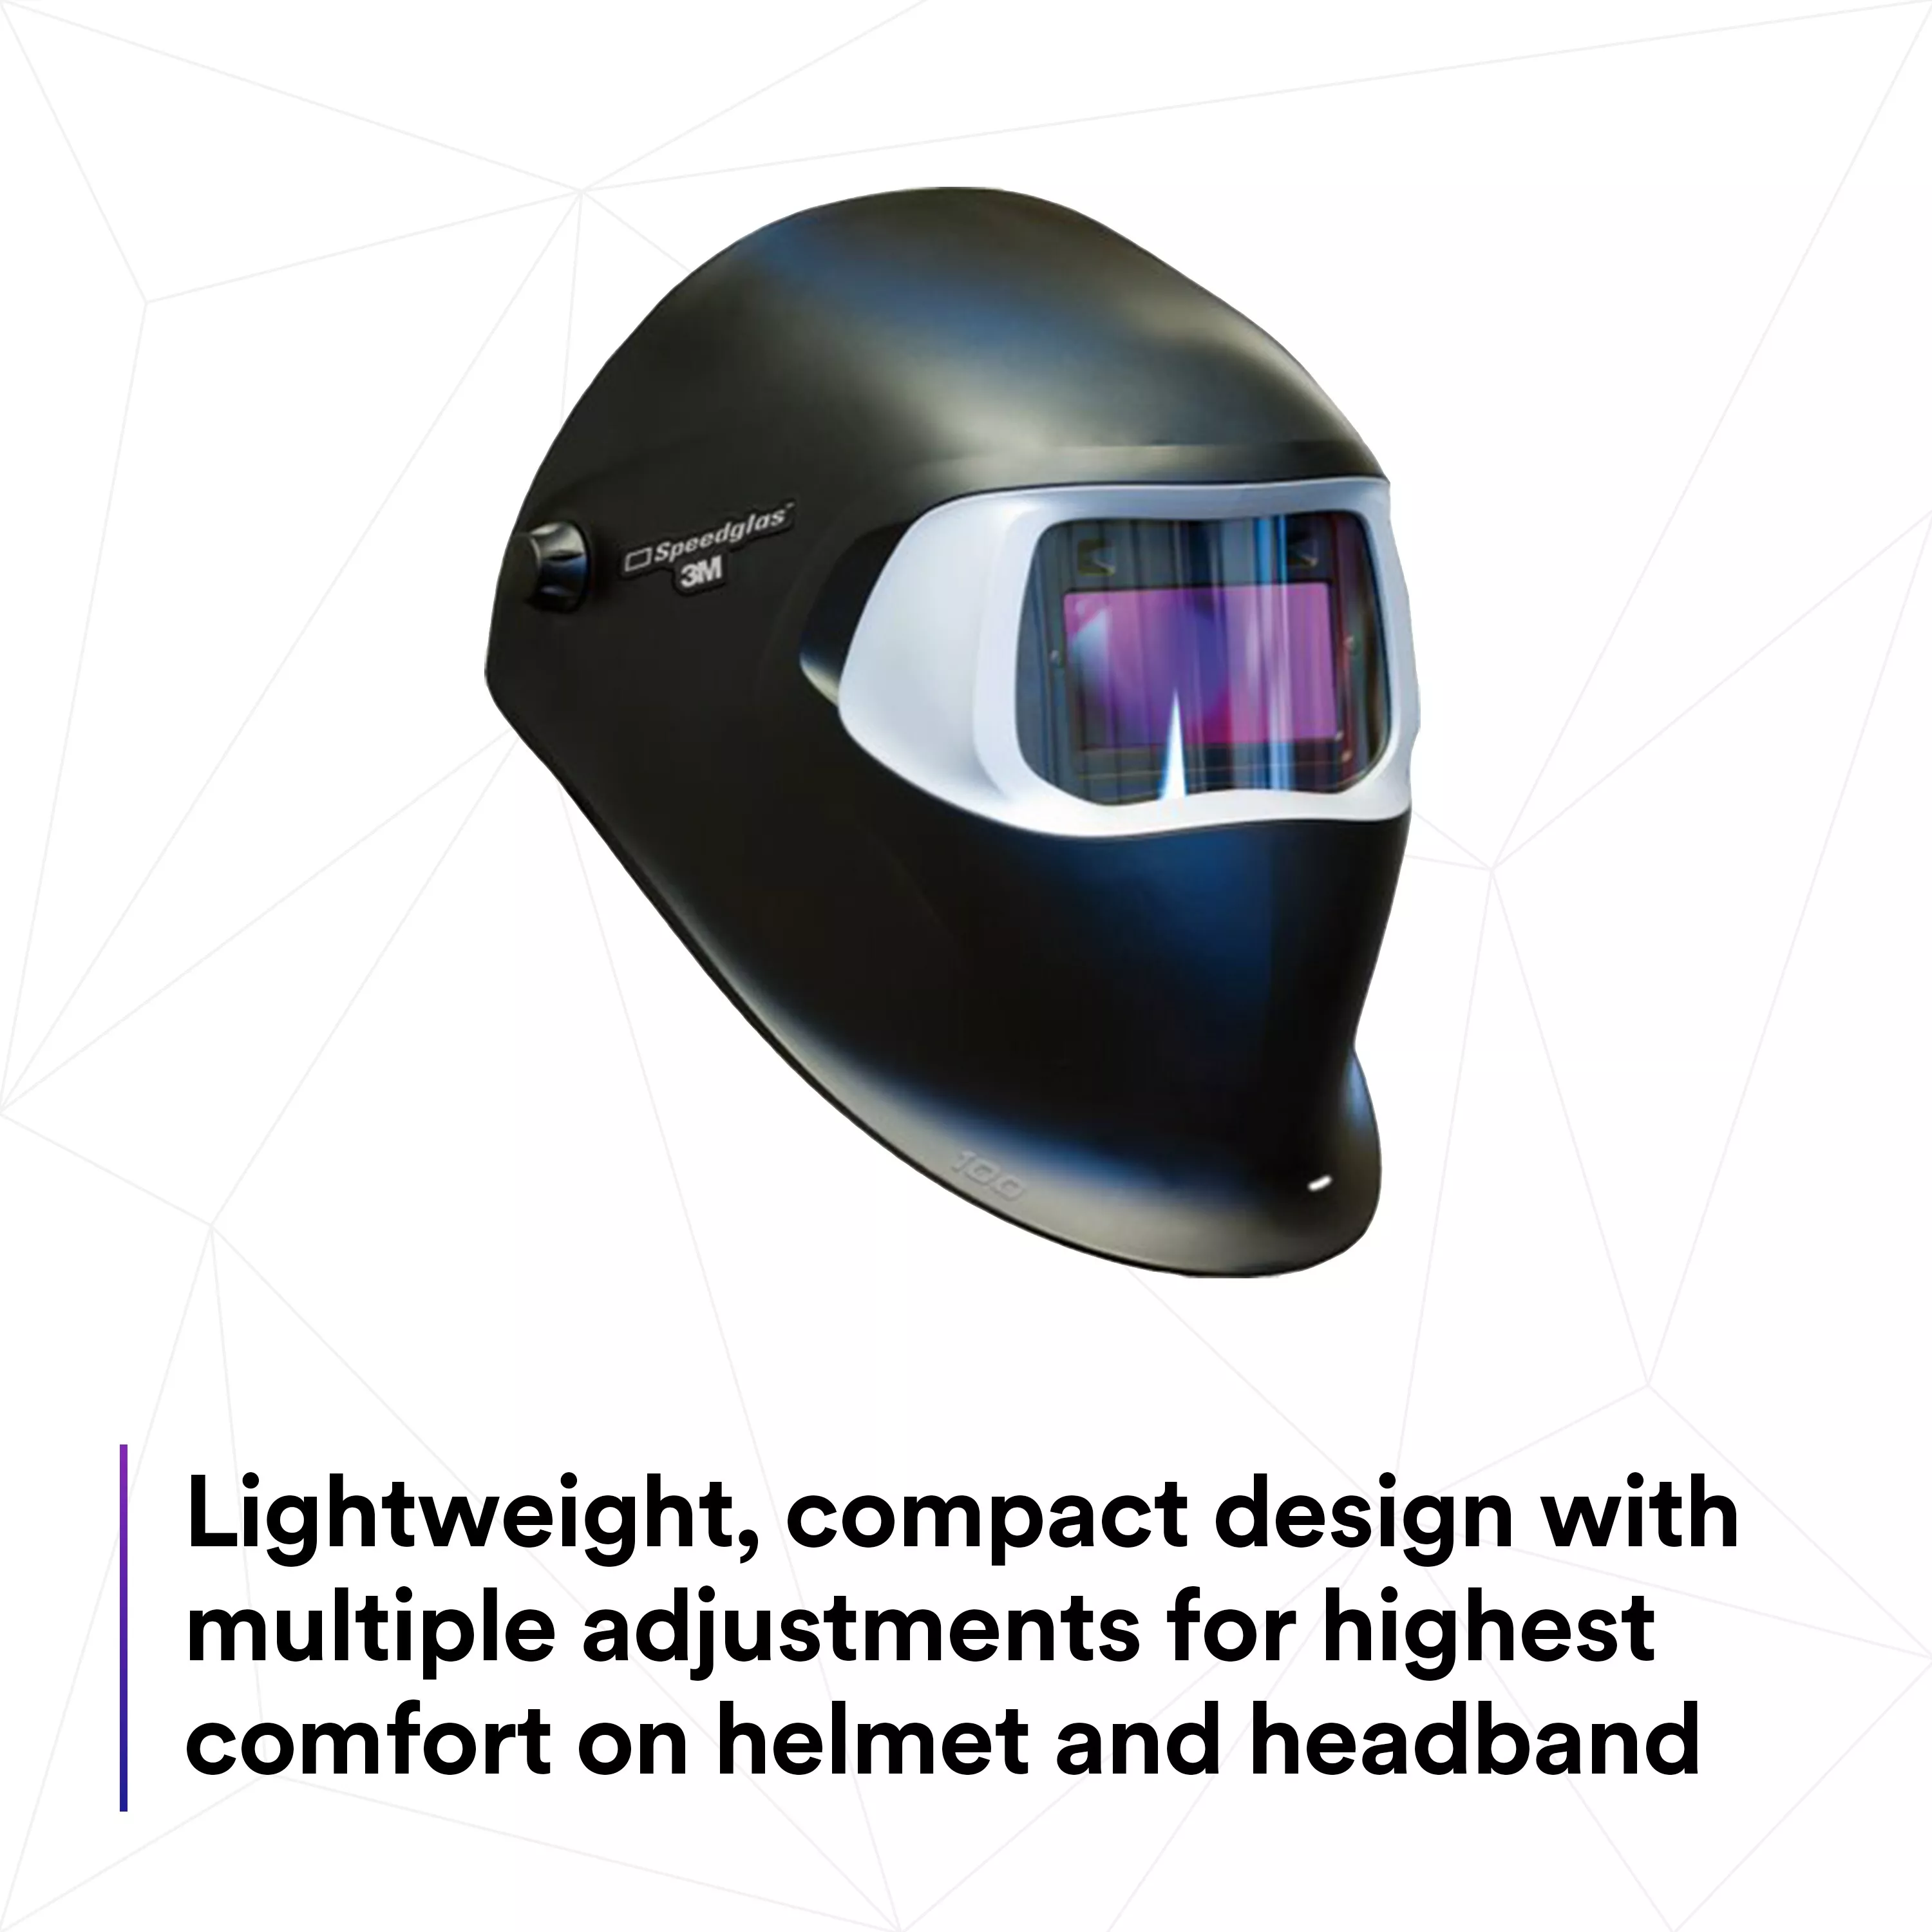 SKU 7000029984 | 3M™ Speedglas™ 100 Welding Helmet 07-0012-31BL/37232(AAD)